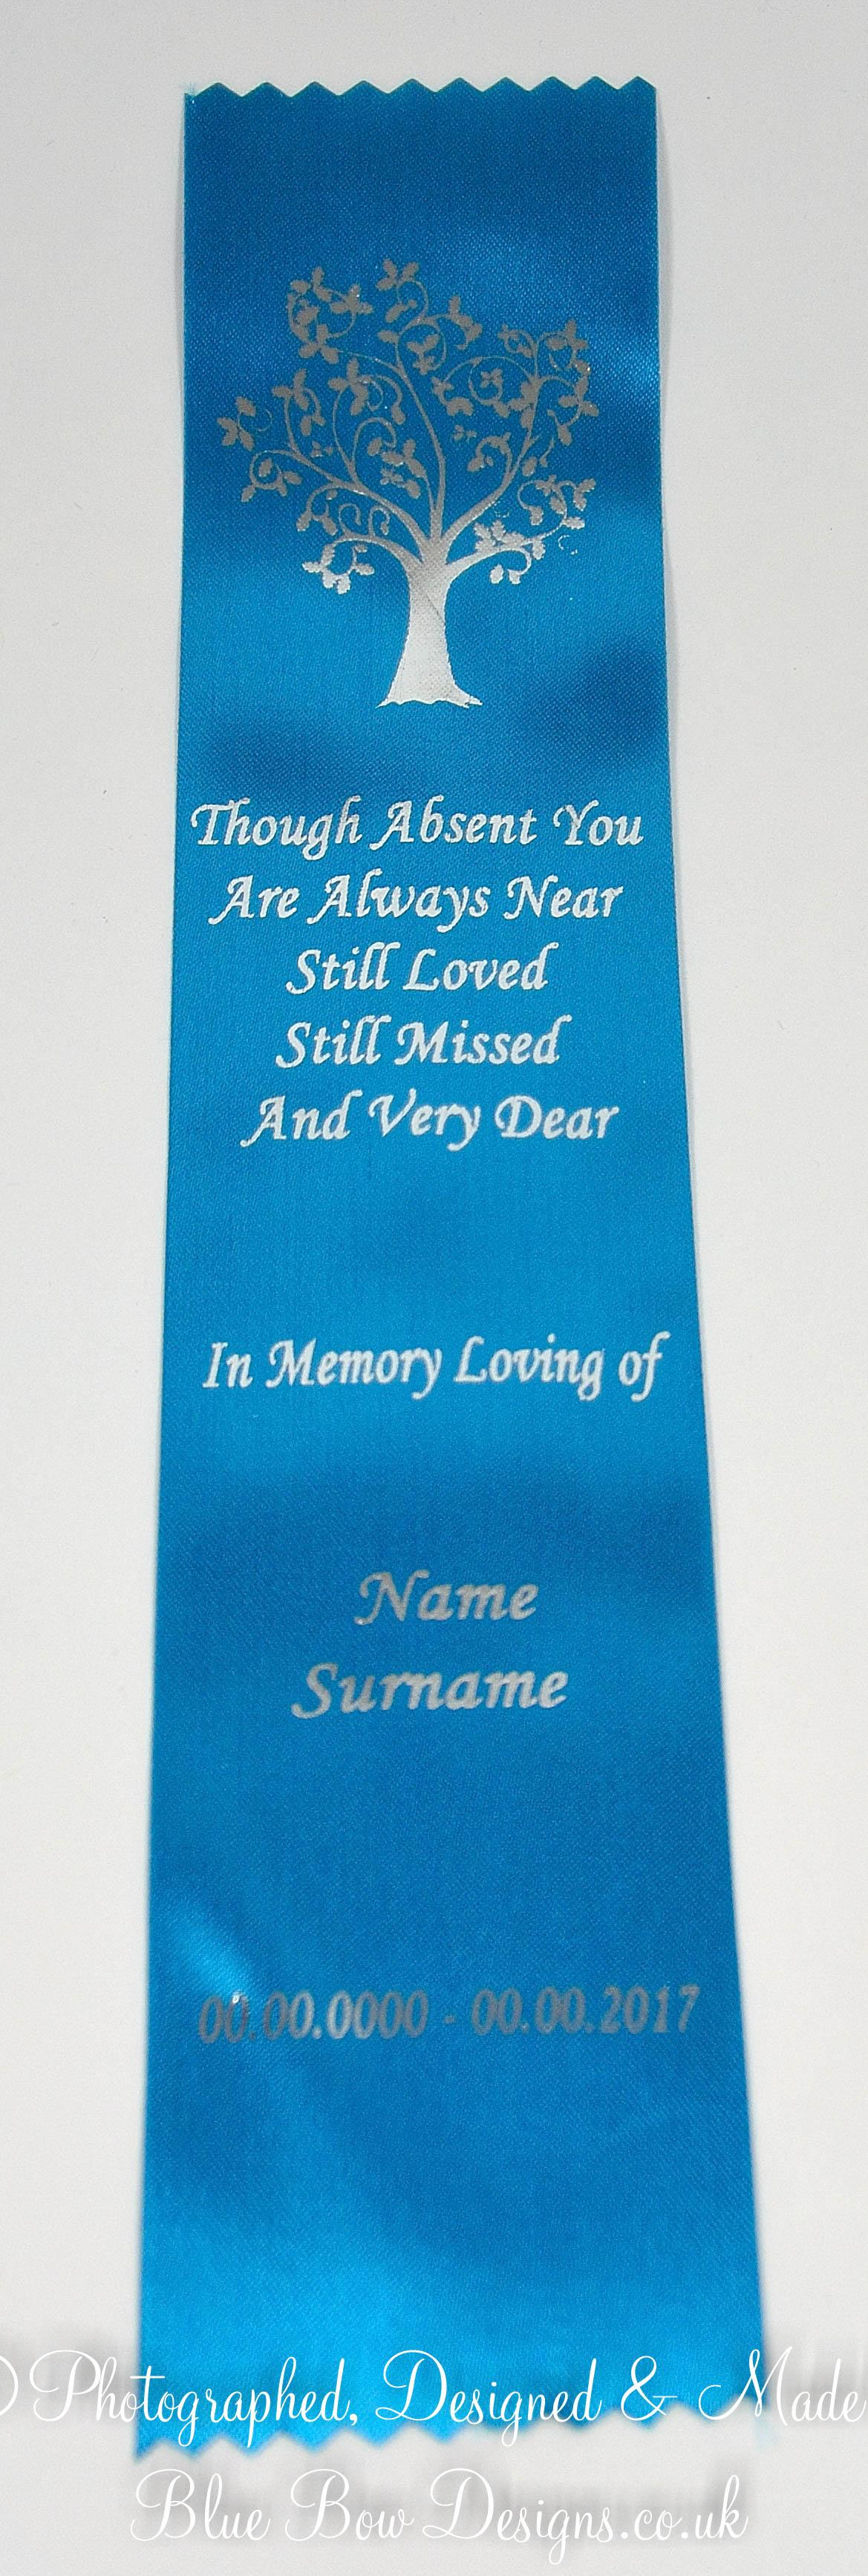 Aqua and silver funeral bookmark